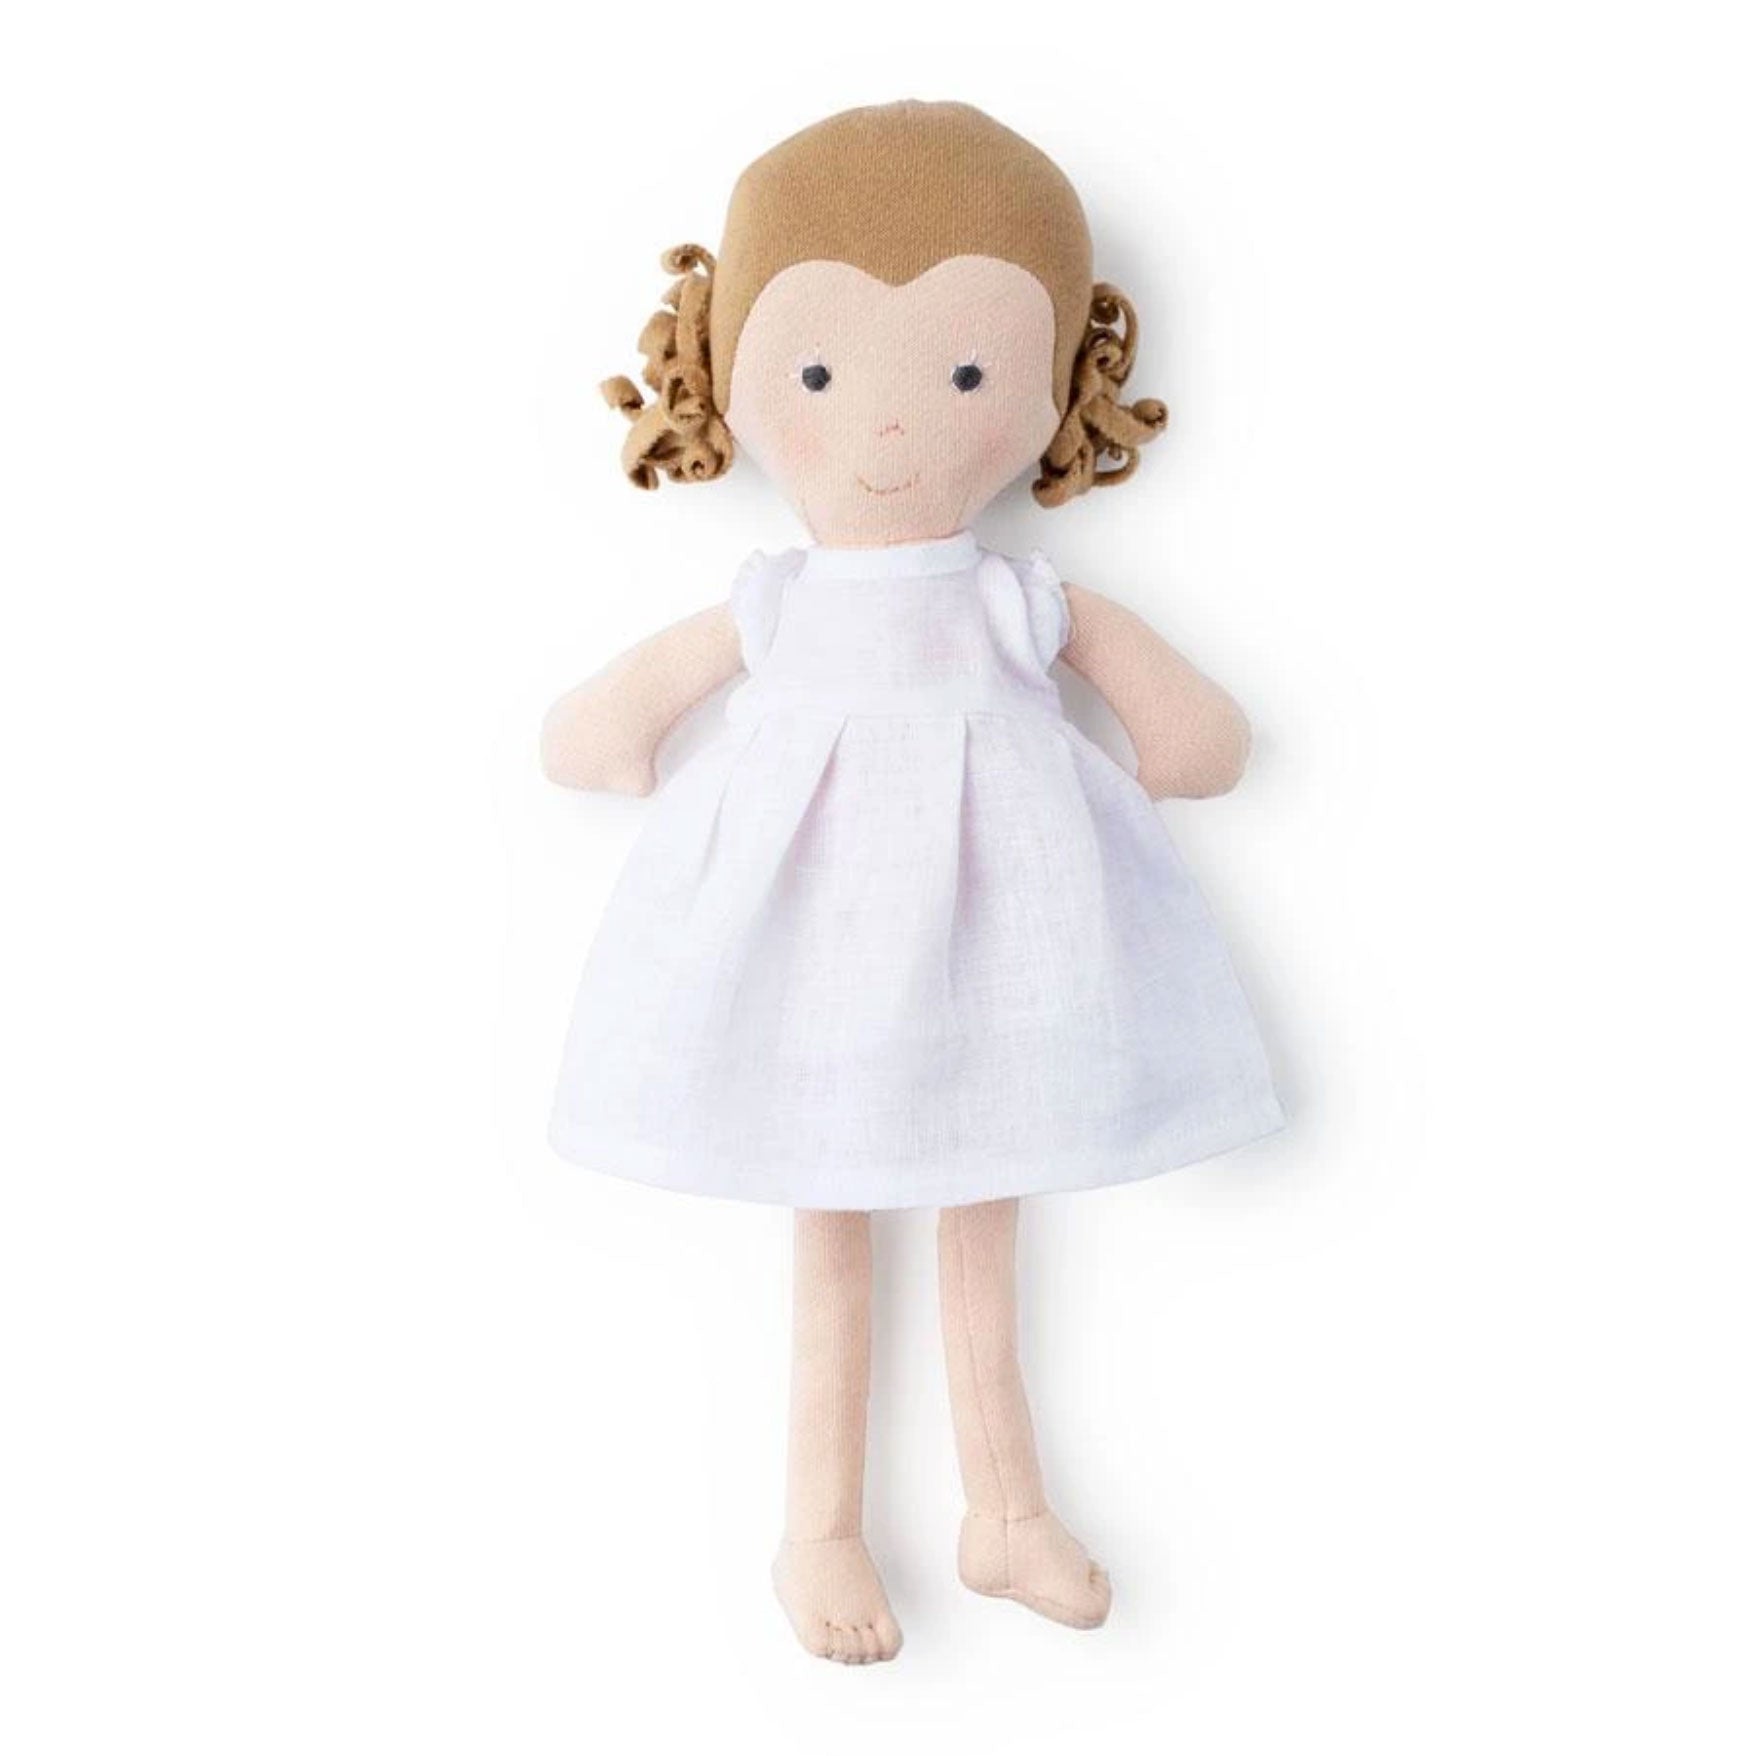 Hazel Village Fern soft doll at Bonjour Baby Baskets, luxury baby gifts